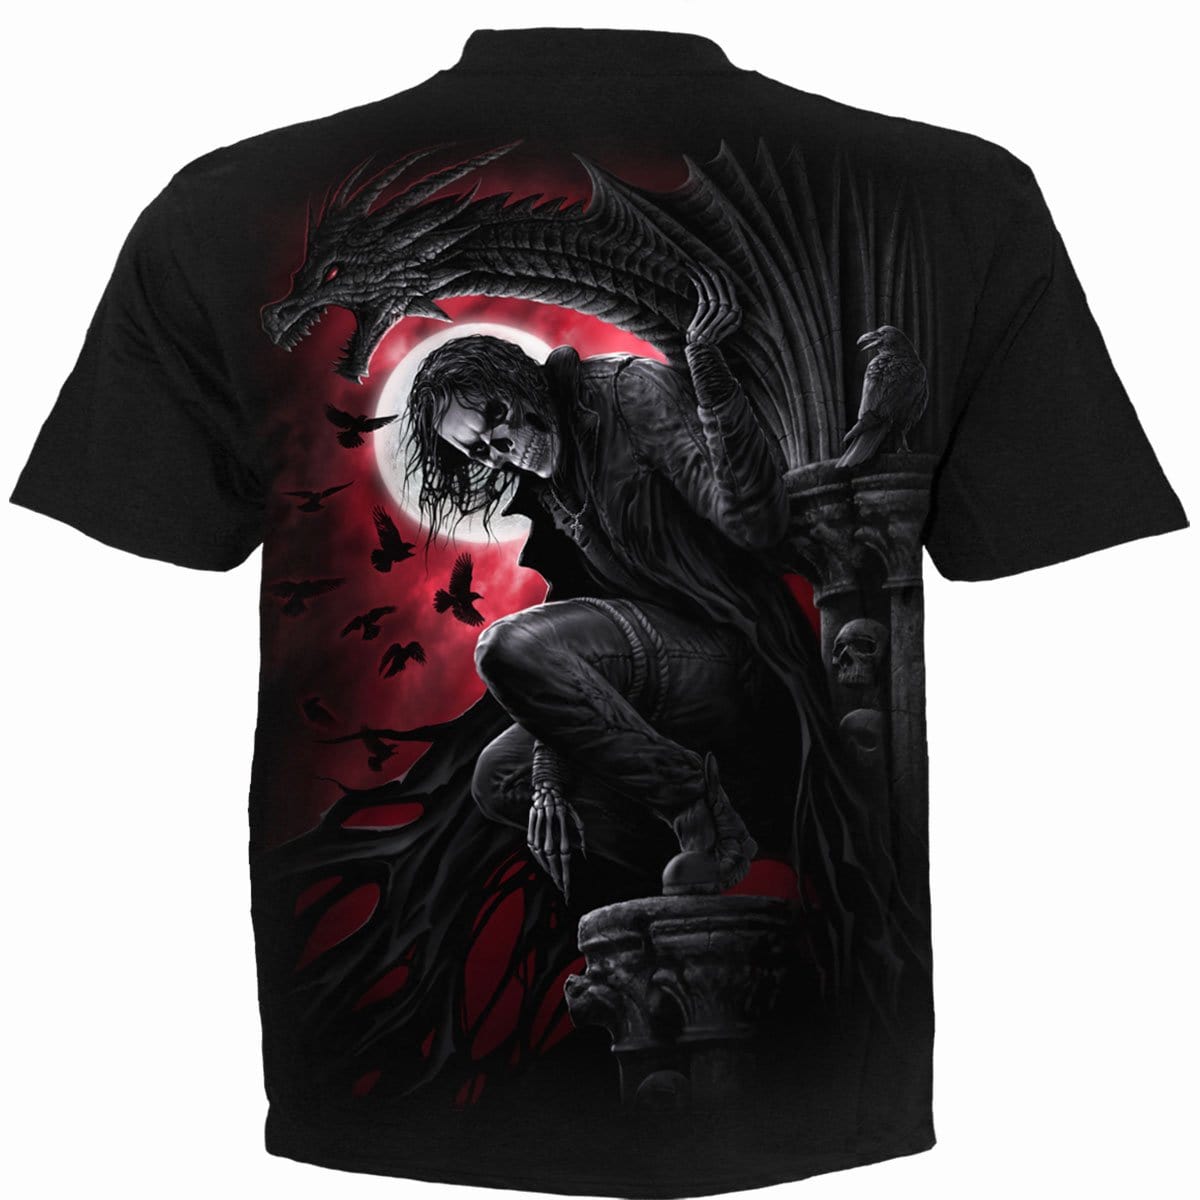 NIGHT STALKER - T-Shirt Black - Spiral USA